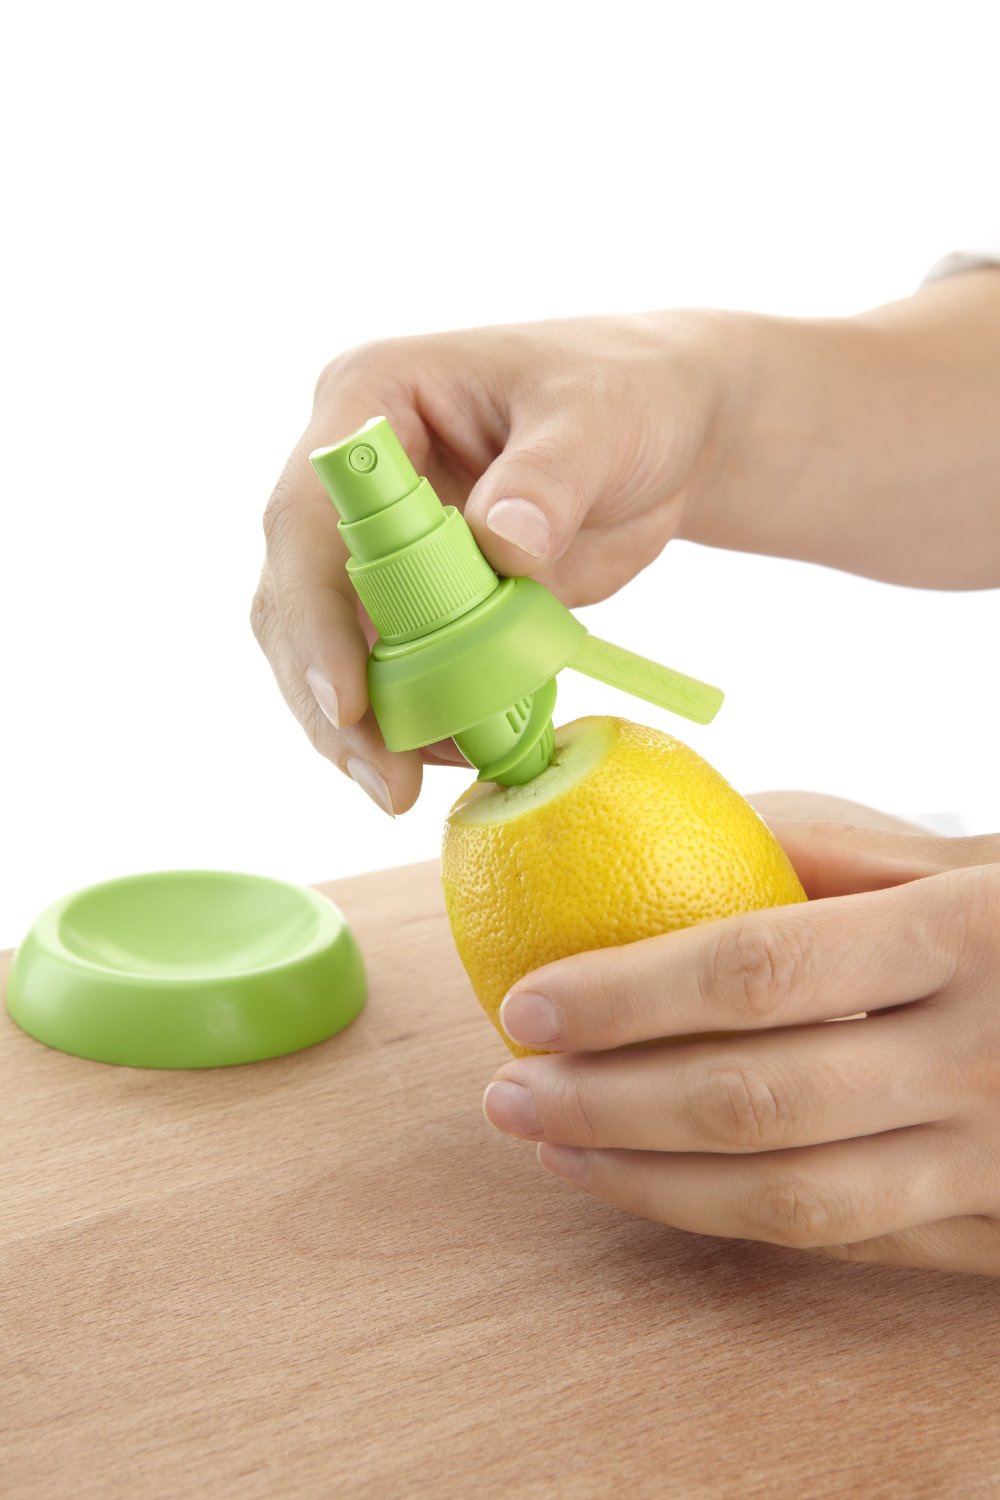 Natural fruit juic sprayer best gift idea 2013